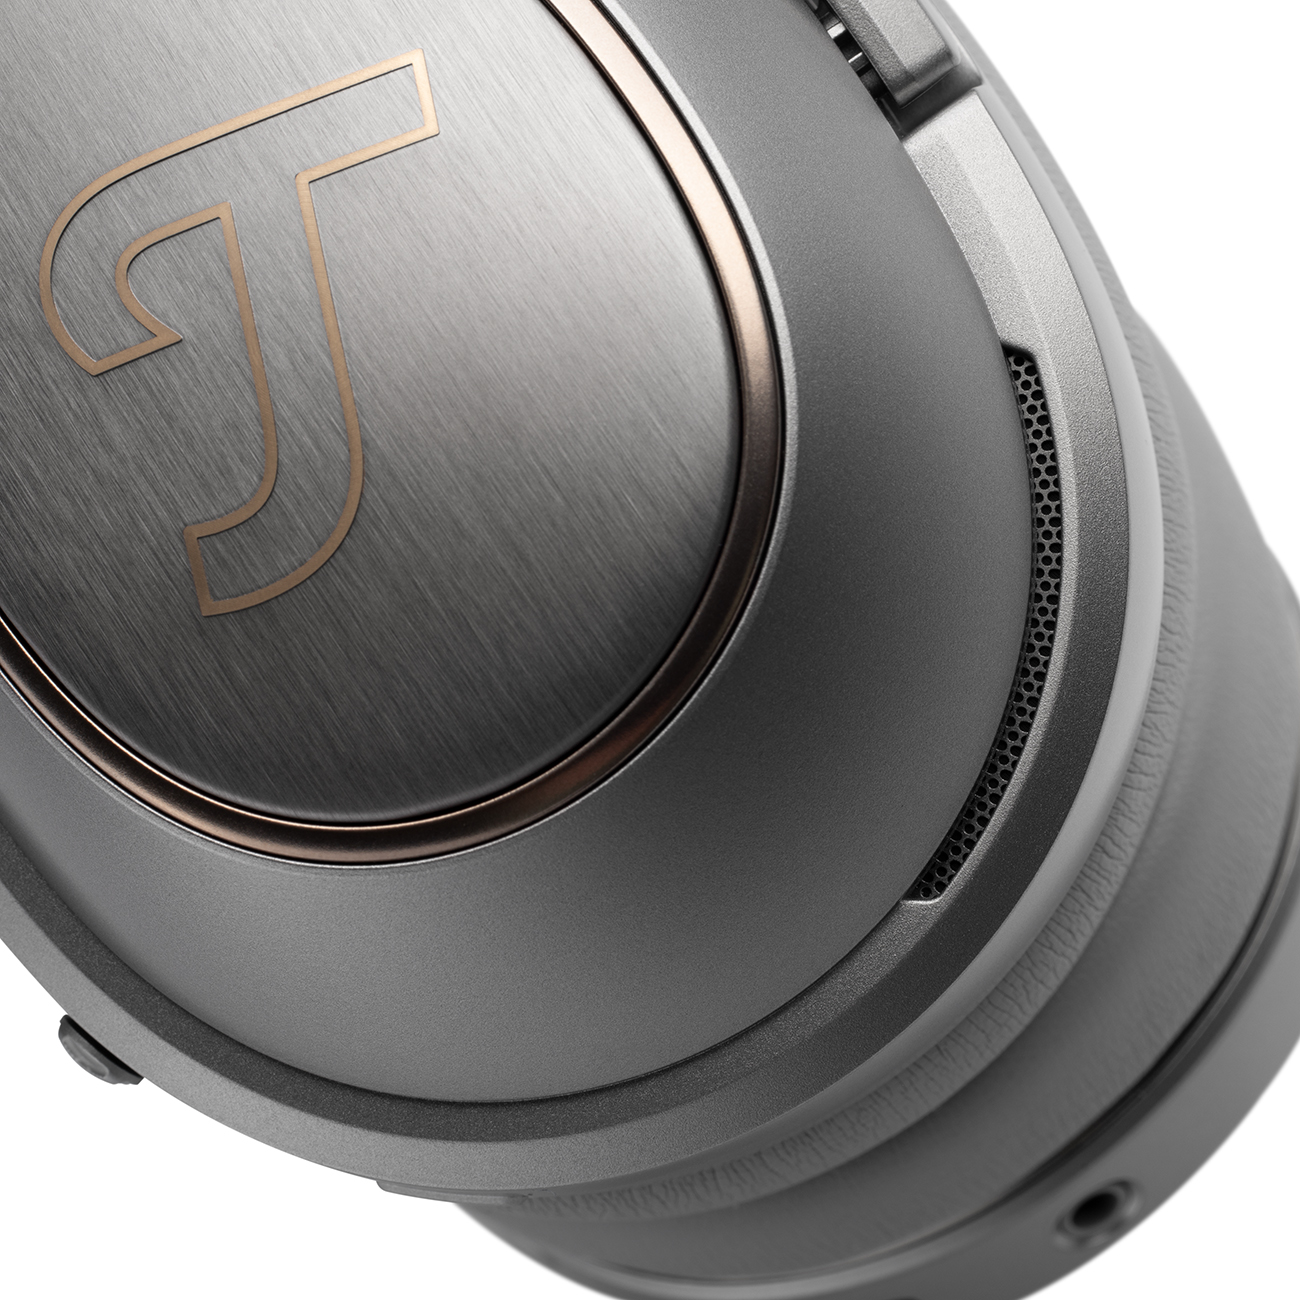 Titanium Grey TEUFEL REAL PRO, Kopfhörer BLUE Bluetooth Over-ear